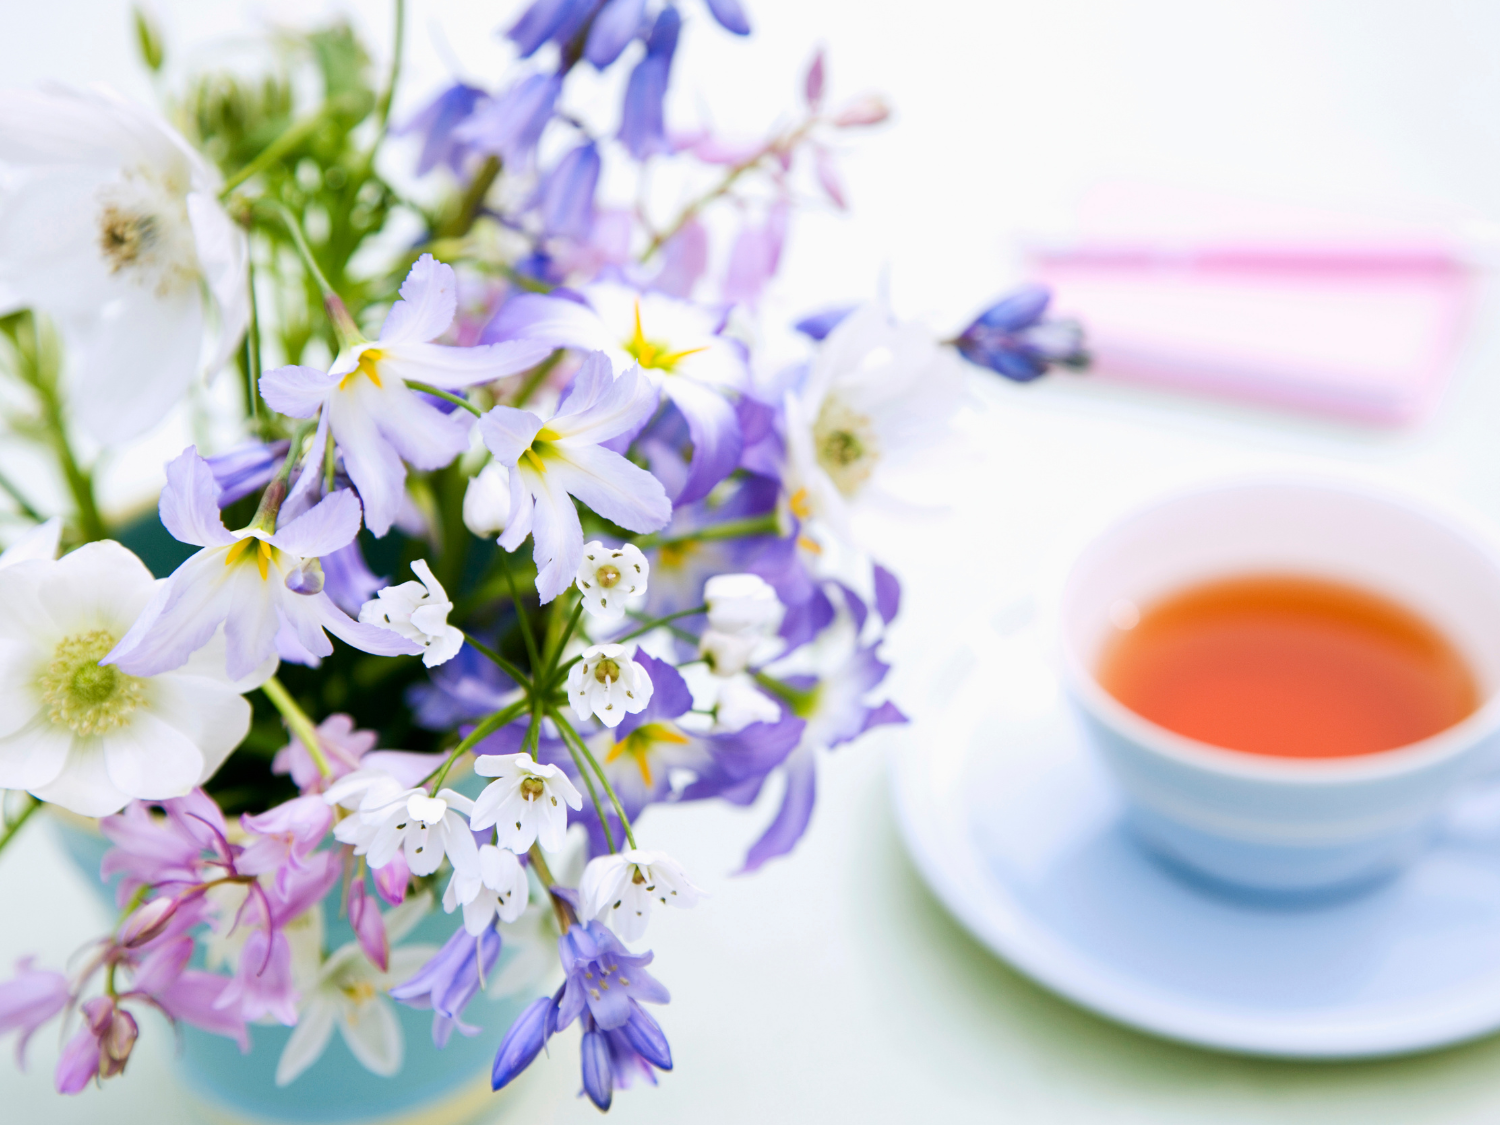 Flowers used in Tea by The Tea Cartel